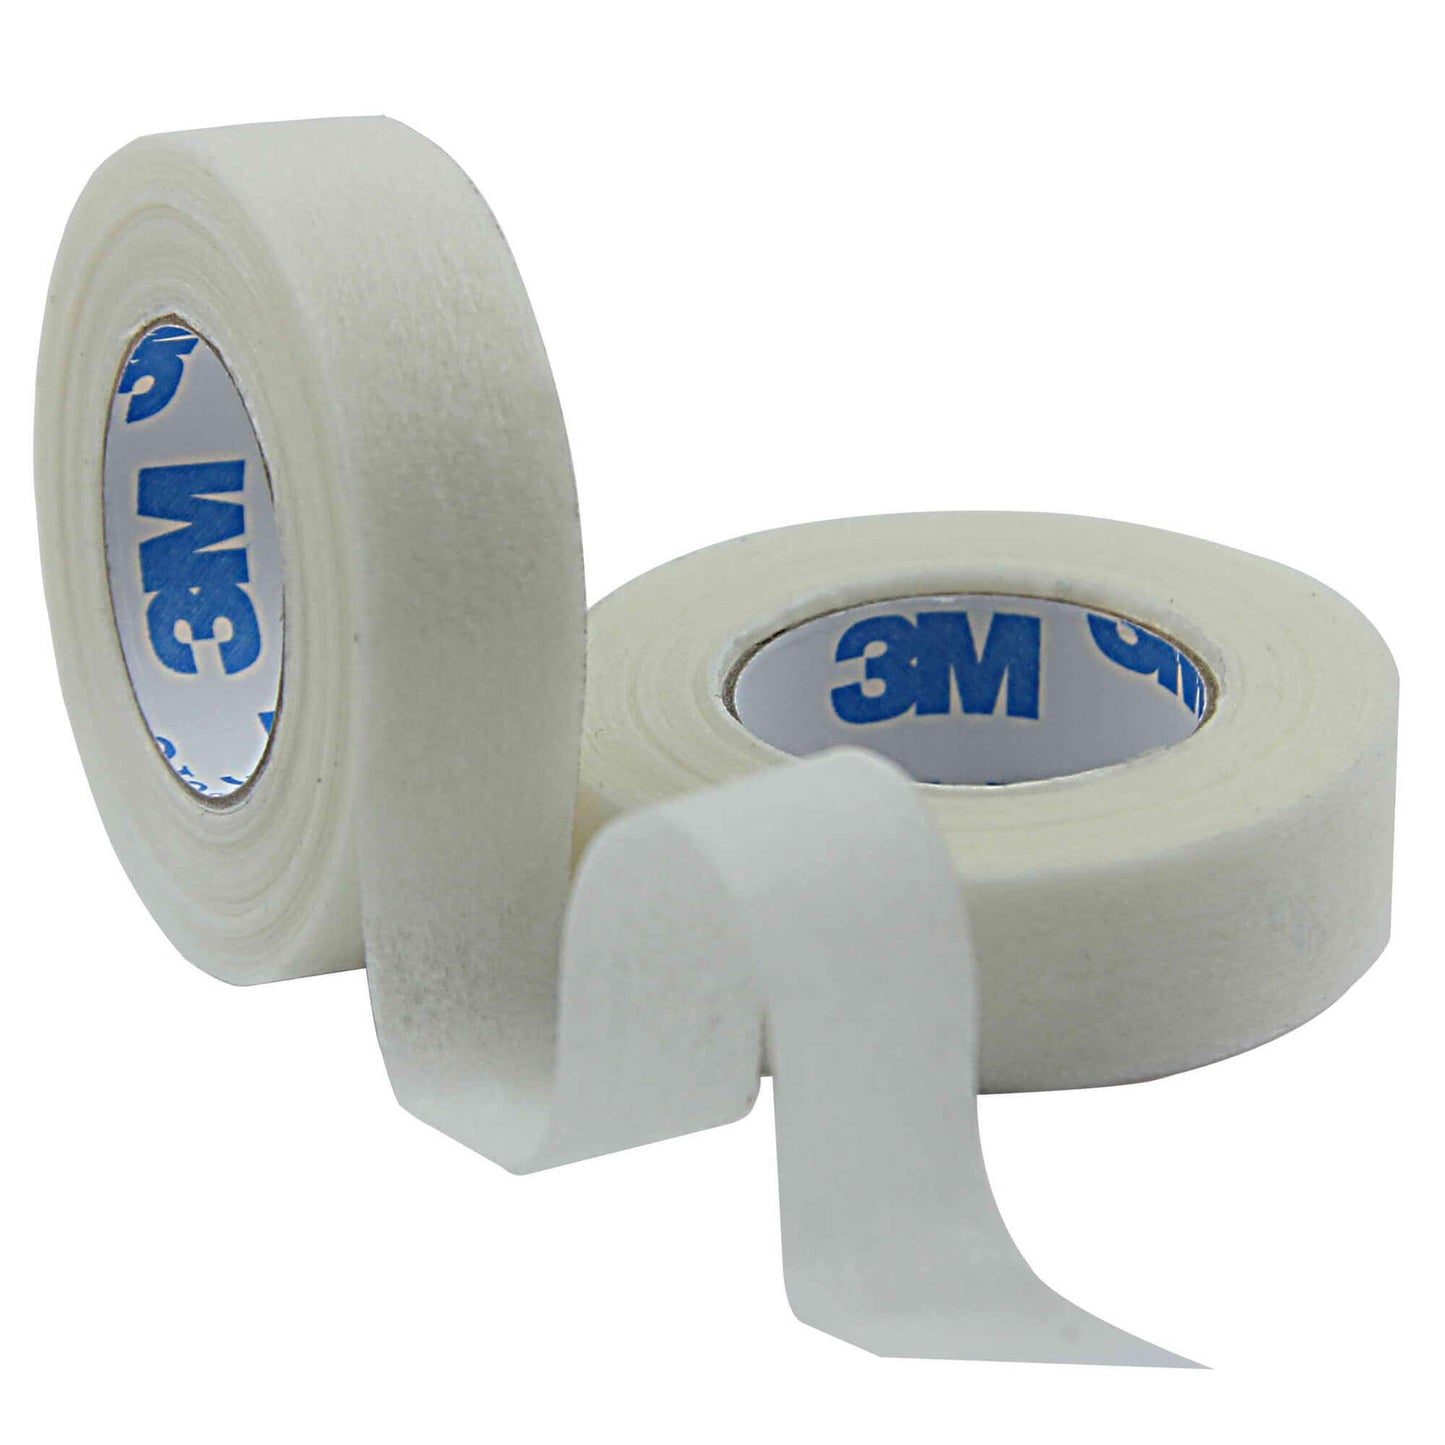 3M Micropore plaster 1,25 cm x 9,1m, 24 pcs. pack white